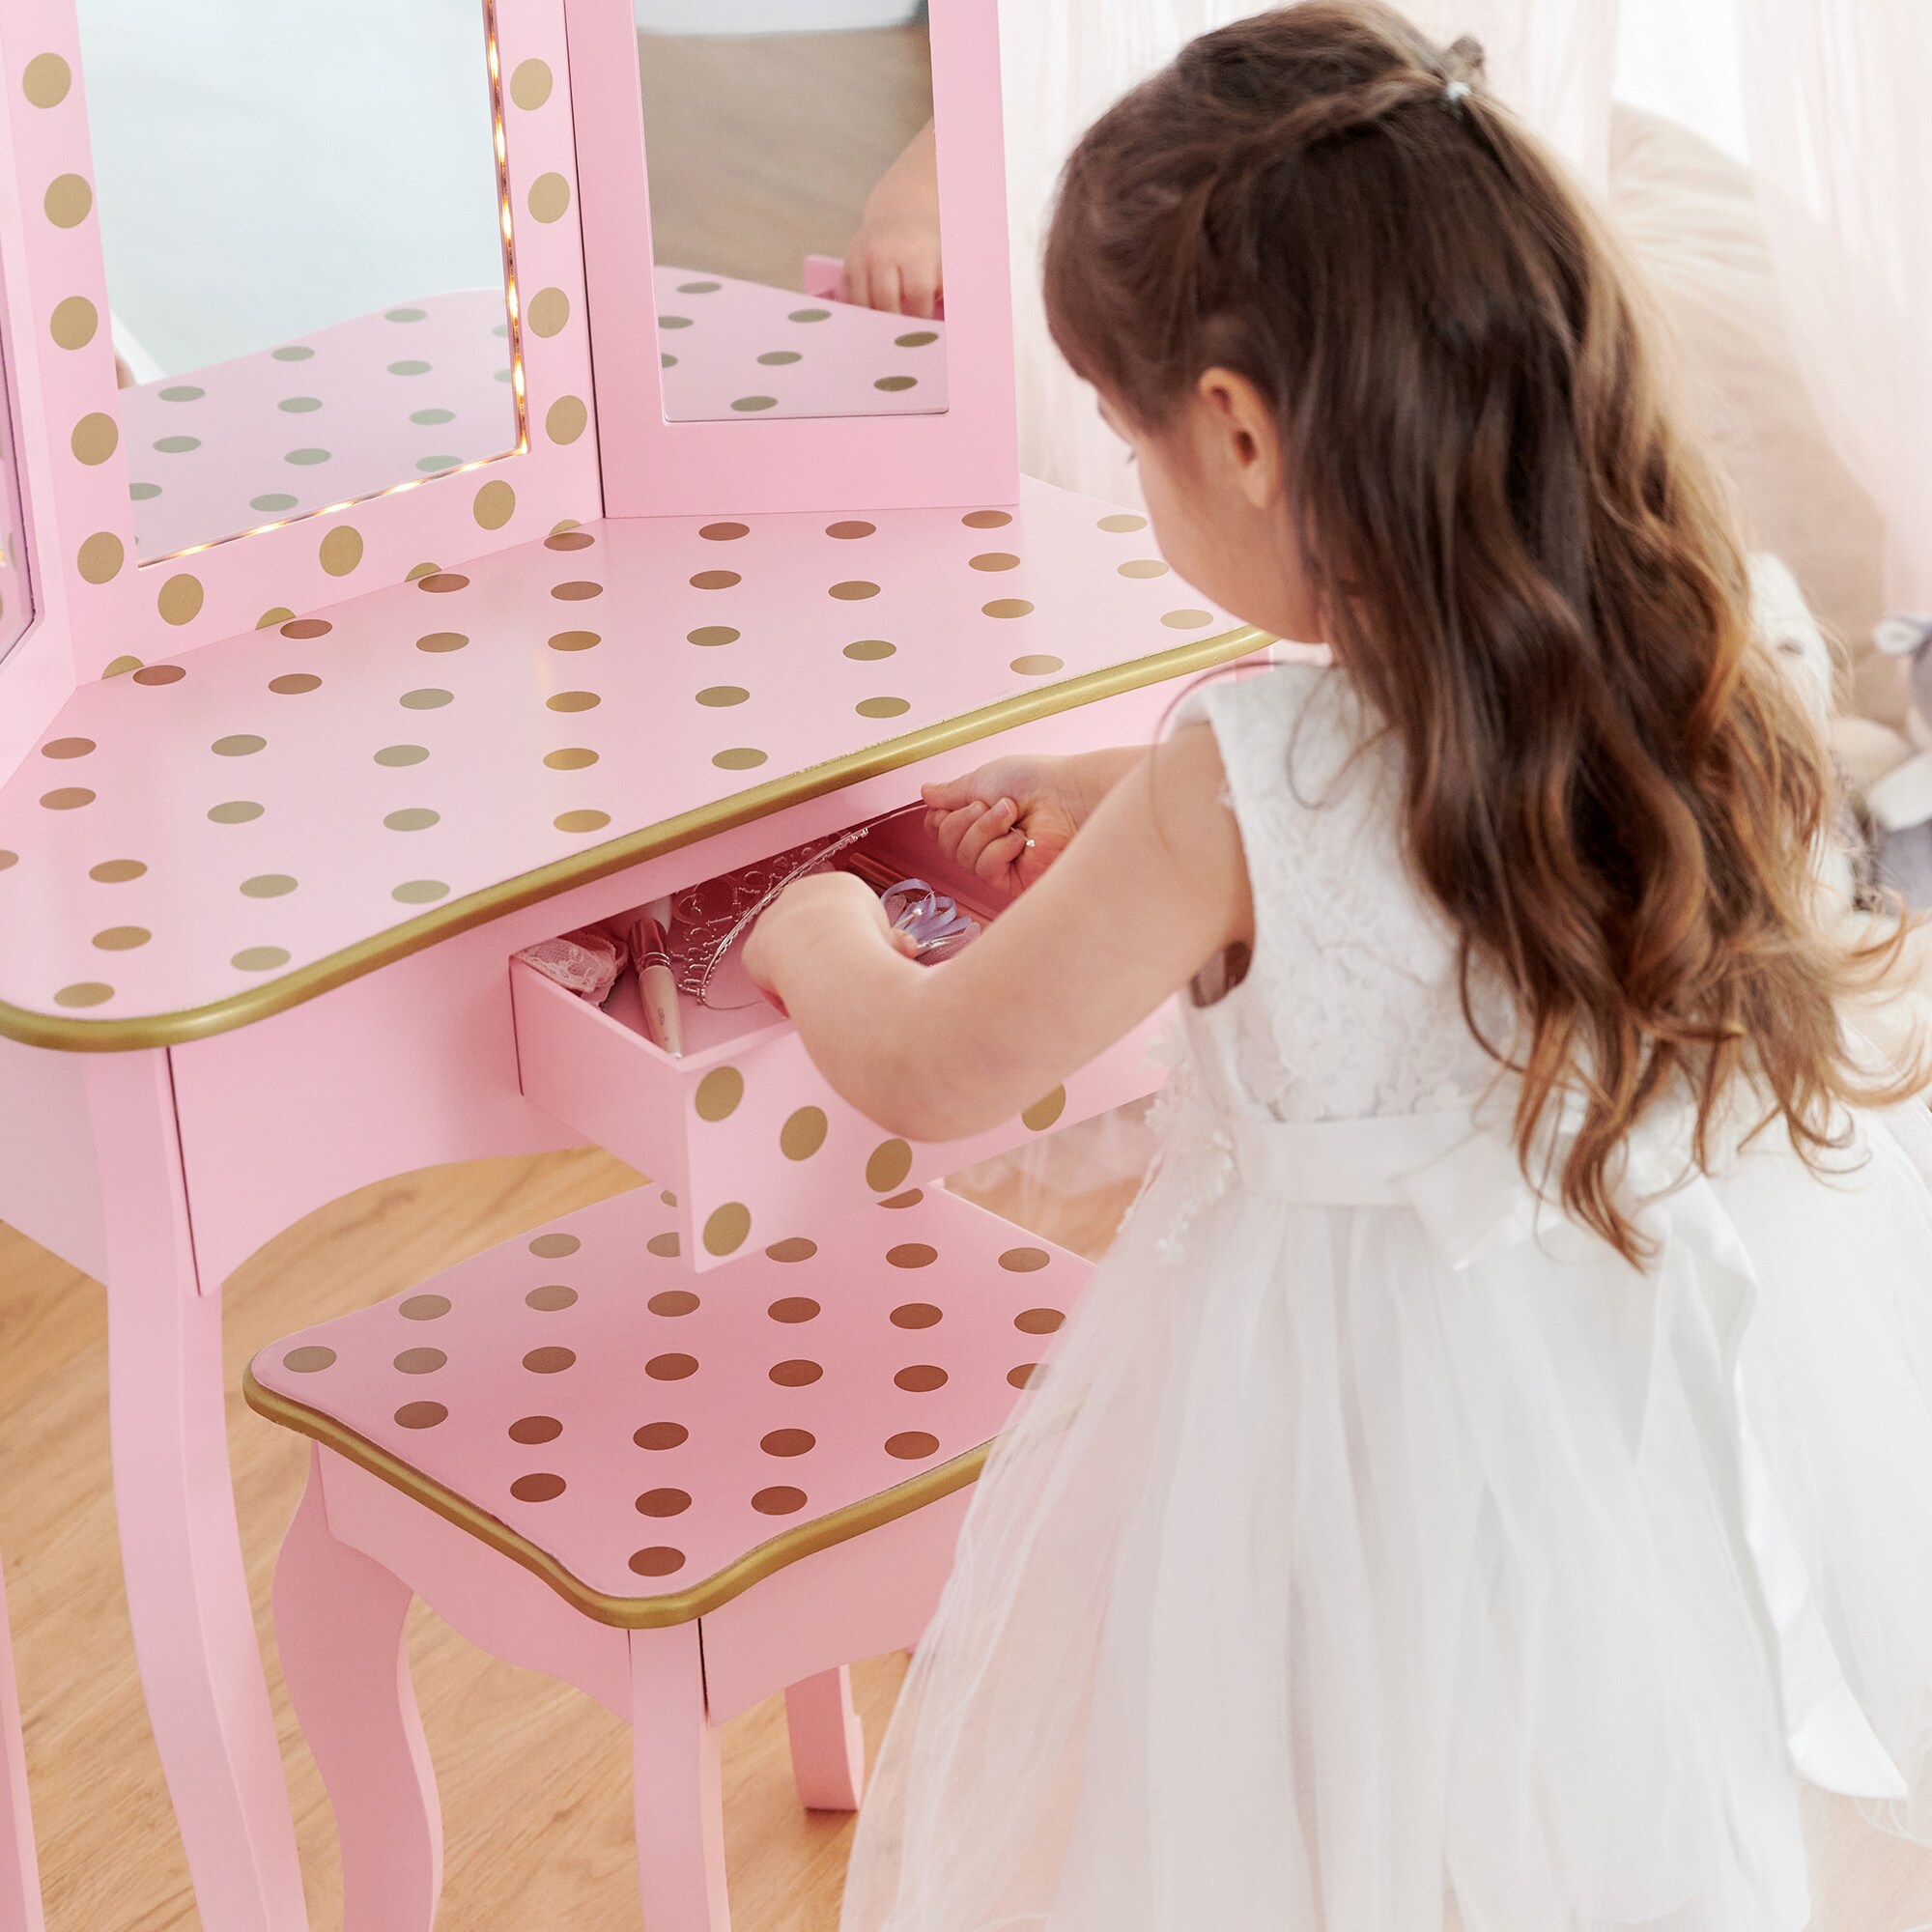 Teamson Kids - Fashion Polka Dot Prints Gisele Play Vanity Set with LED Mirror Light - White / Gold